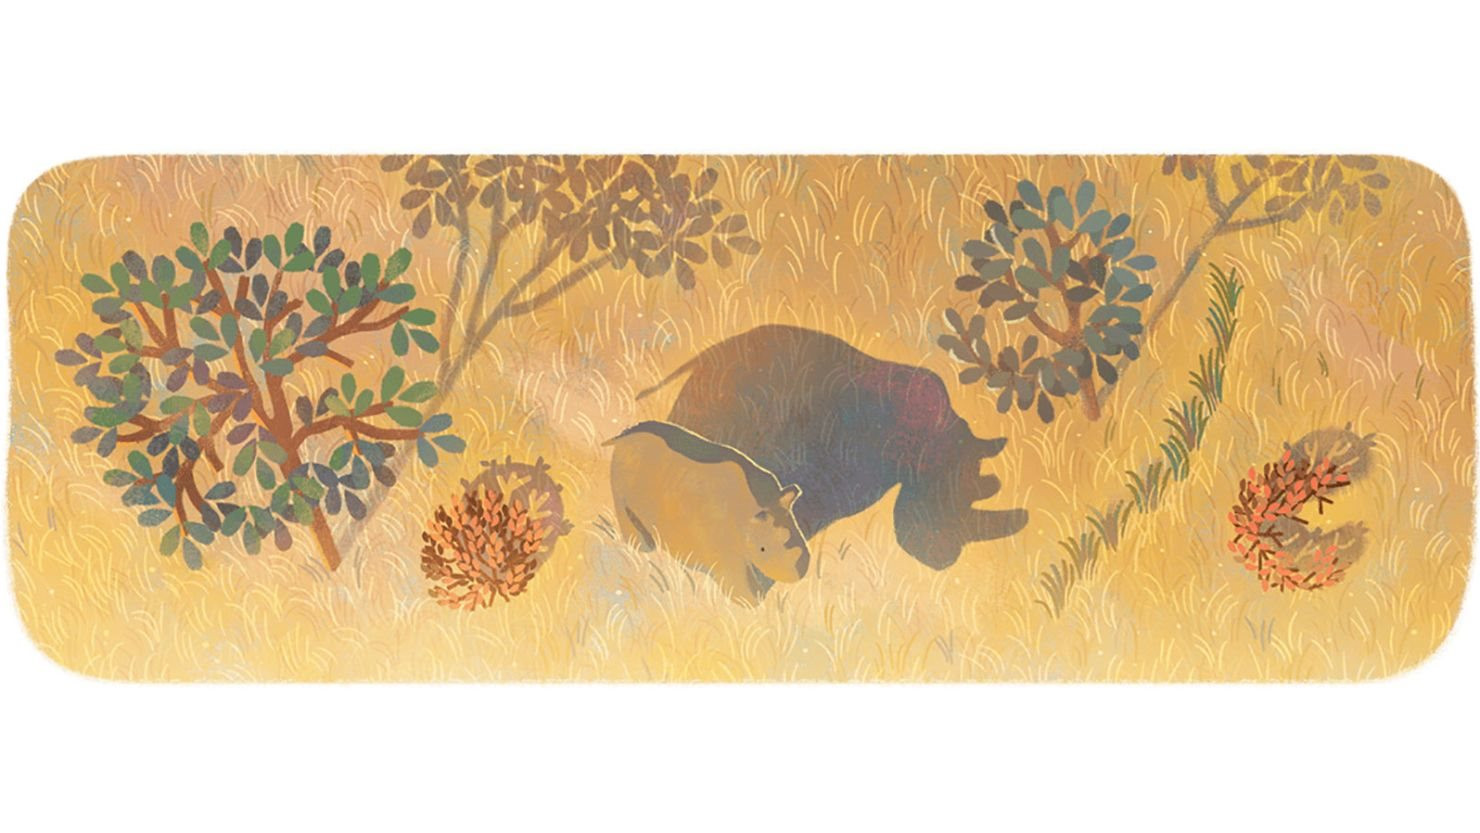 201220124946-google-doodle-sudan-the-white-rhino.jpg